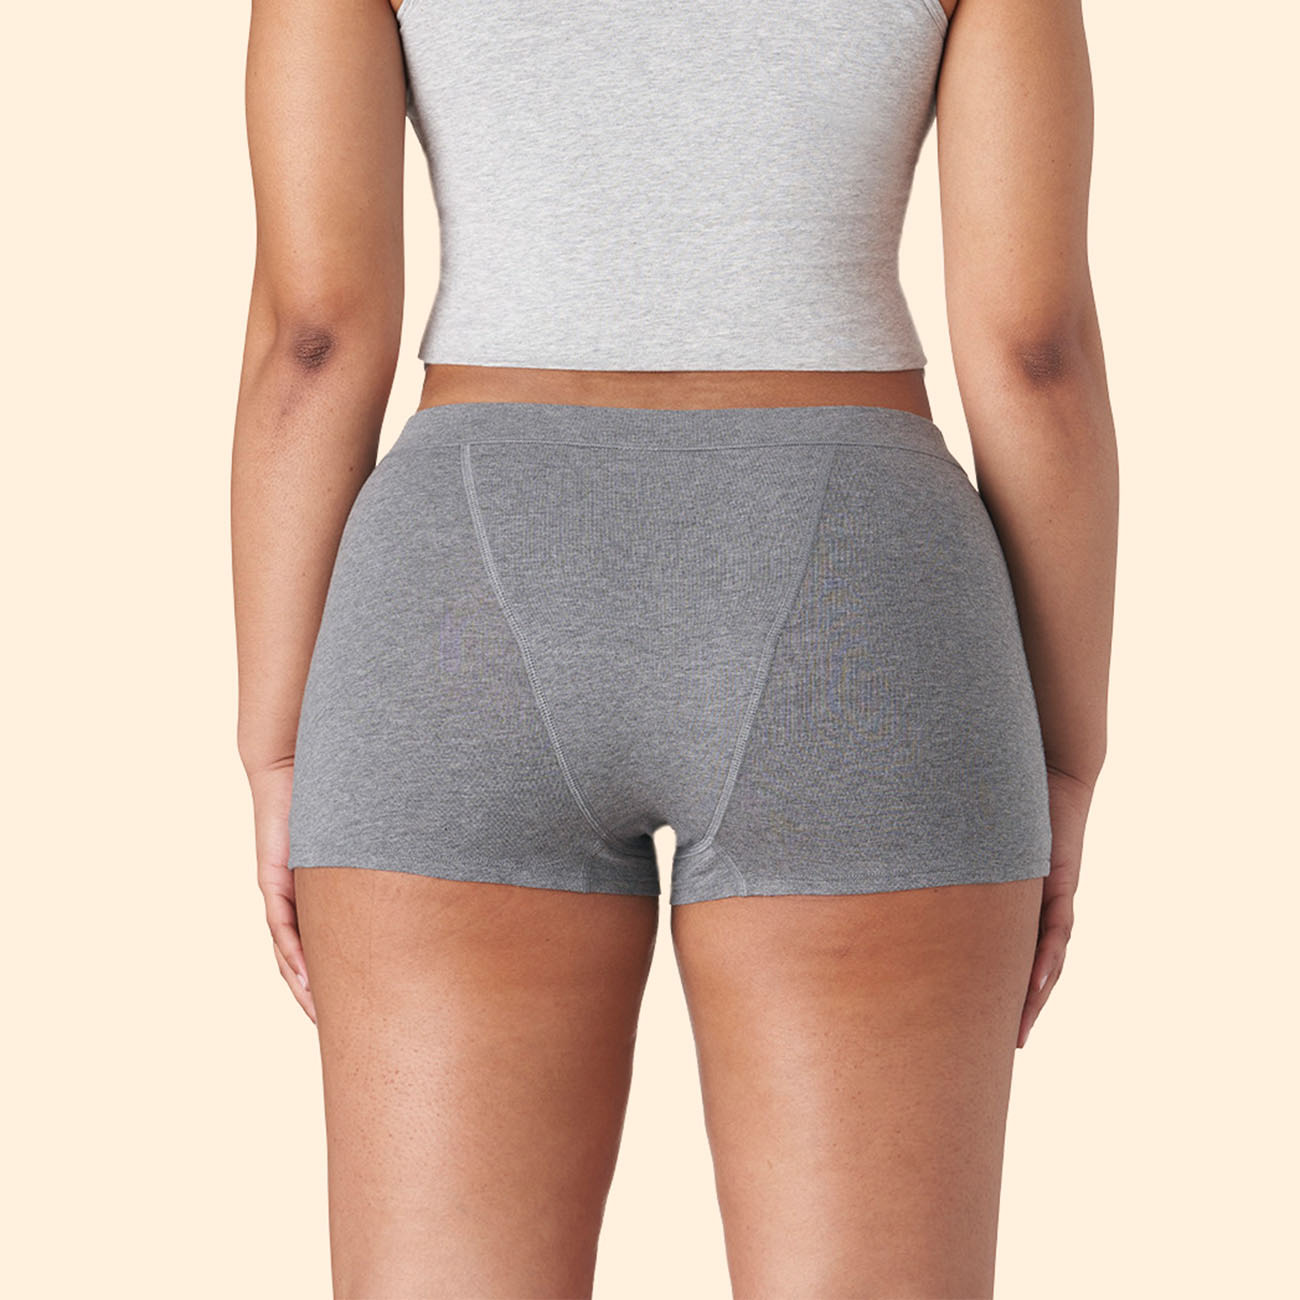 Thinx For All Women's Super Absorbency High-waist Brief Period Underwear -  Gray M : Target